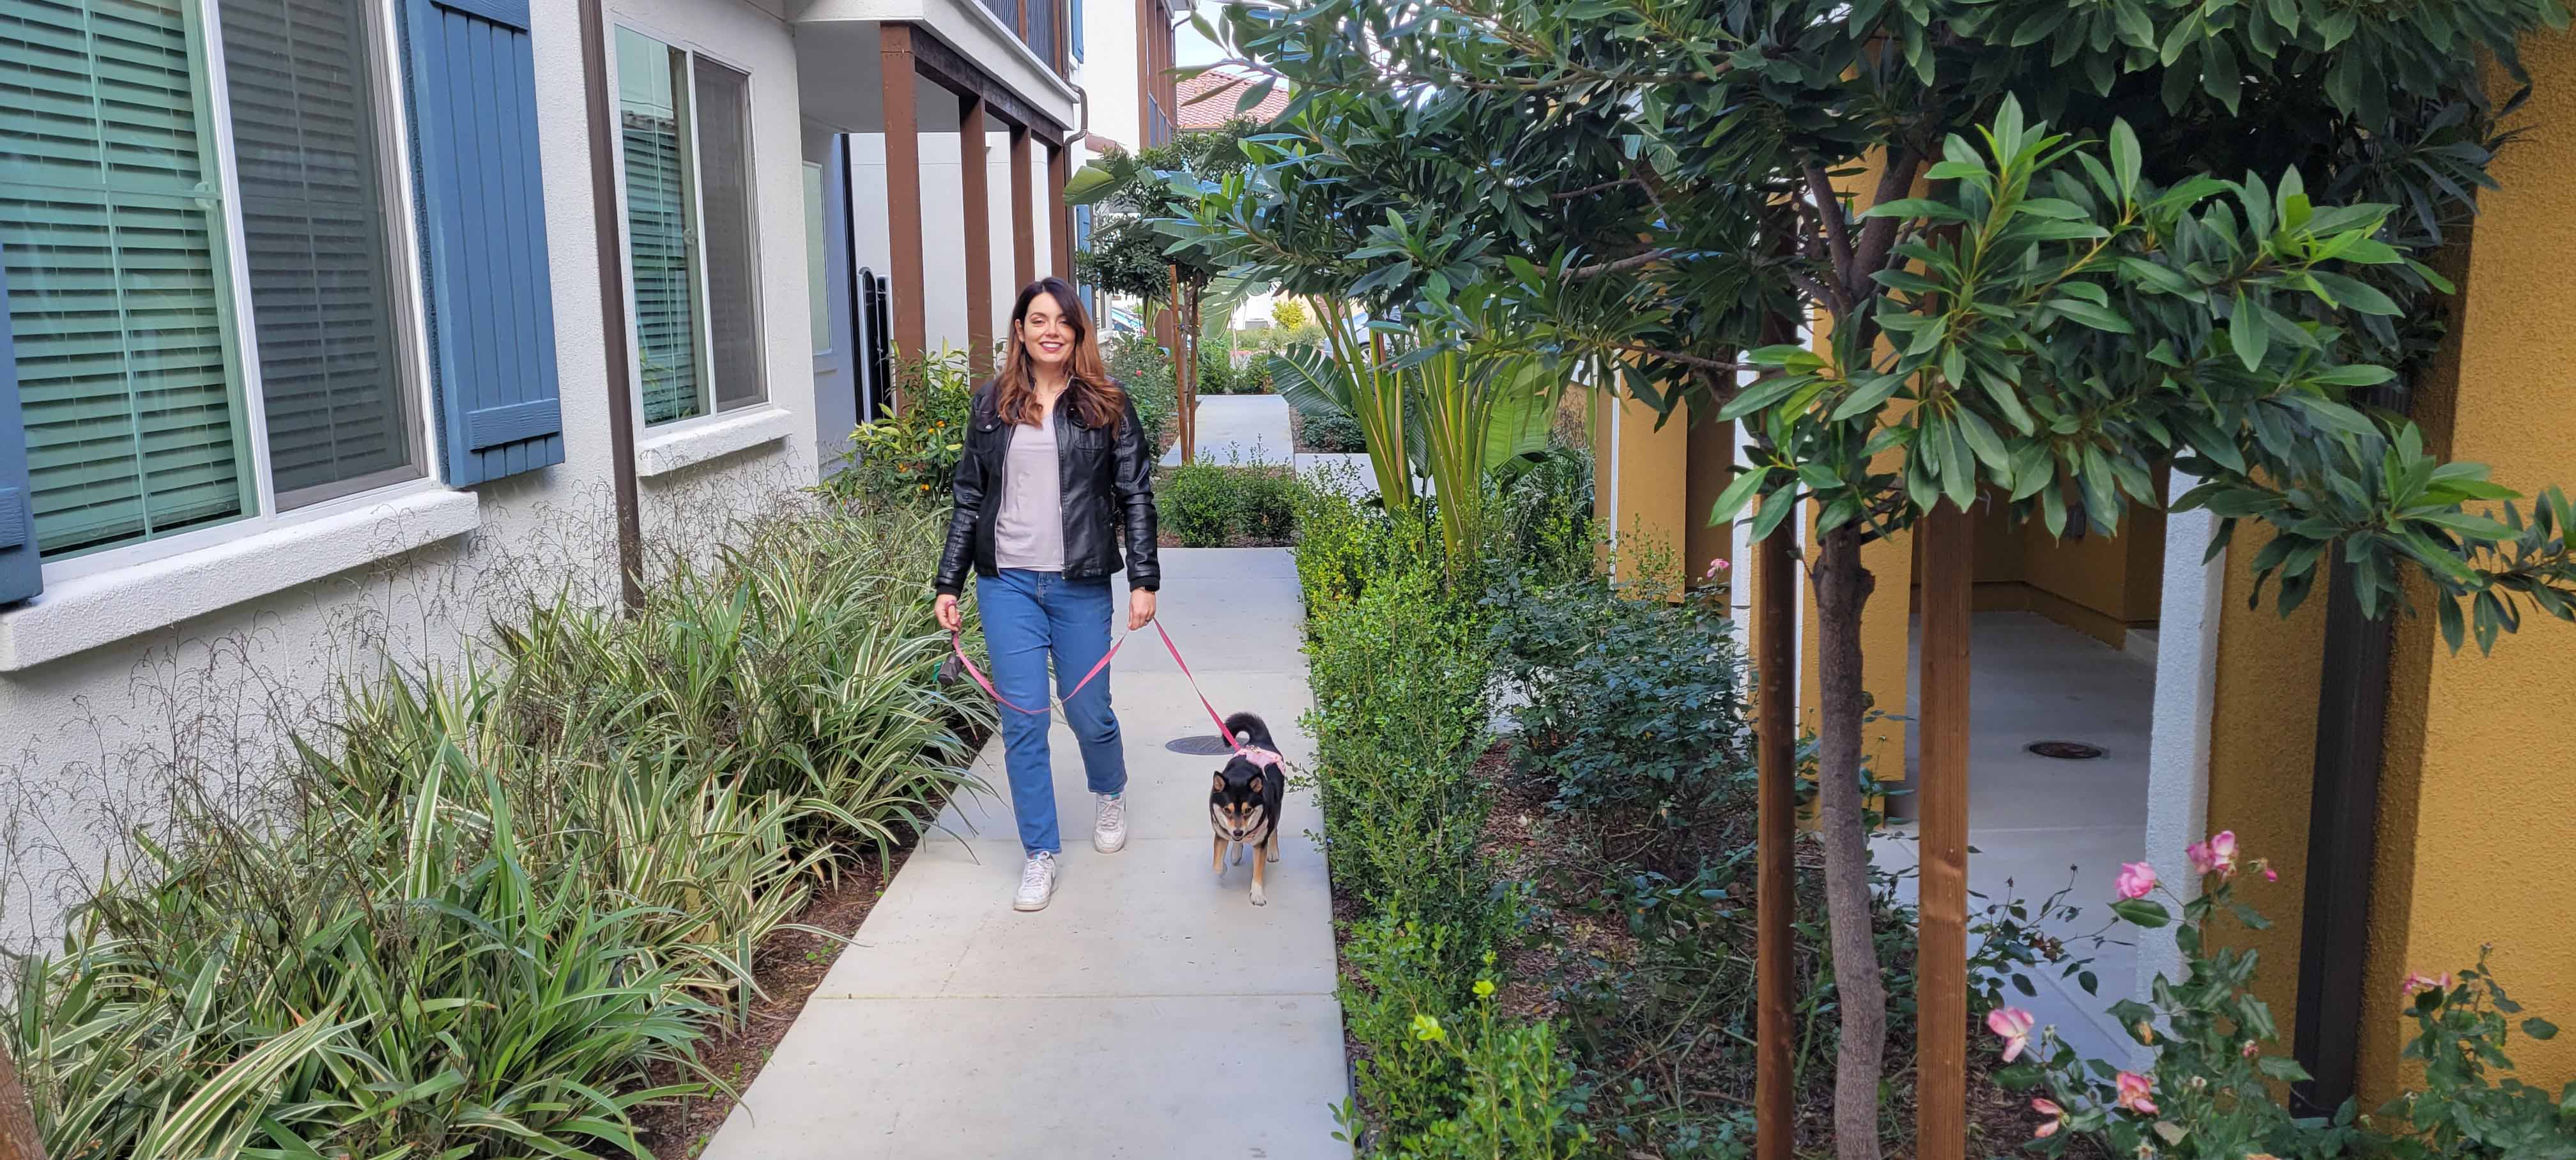 Liliana Salinas walks her dog